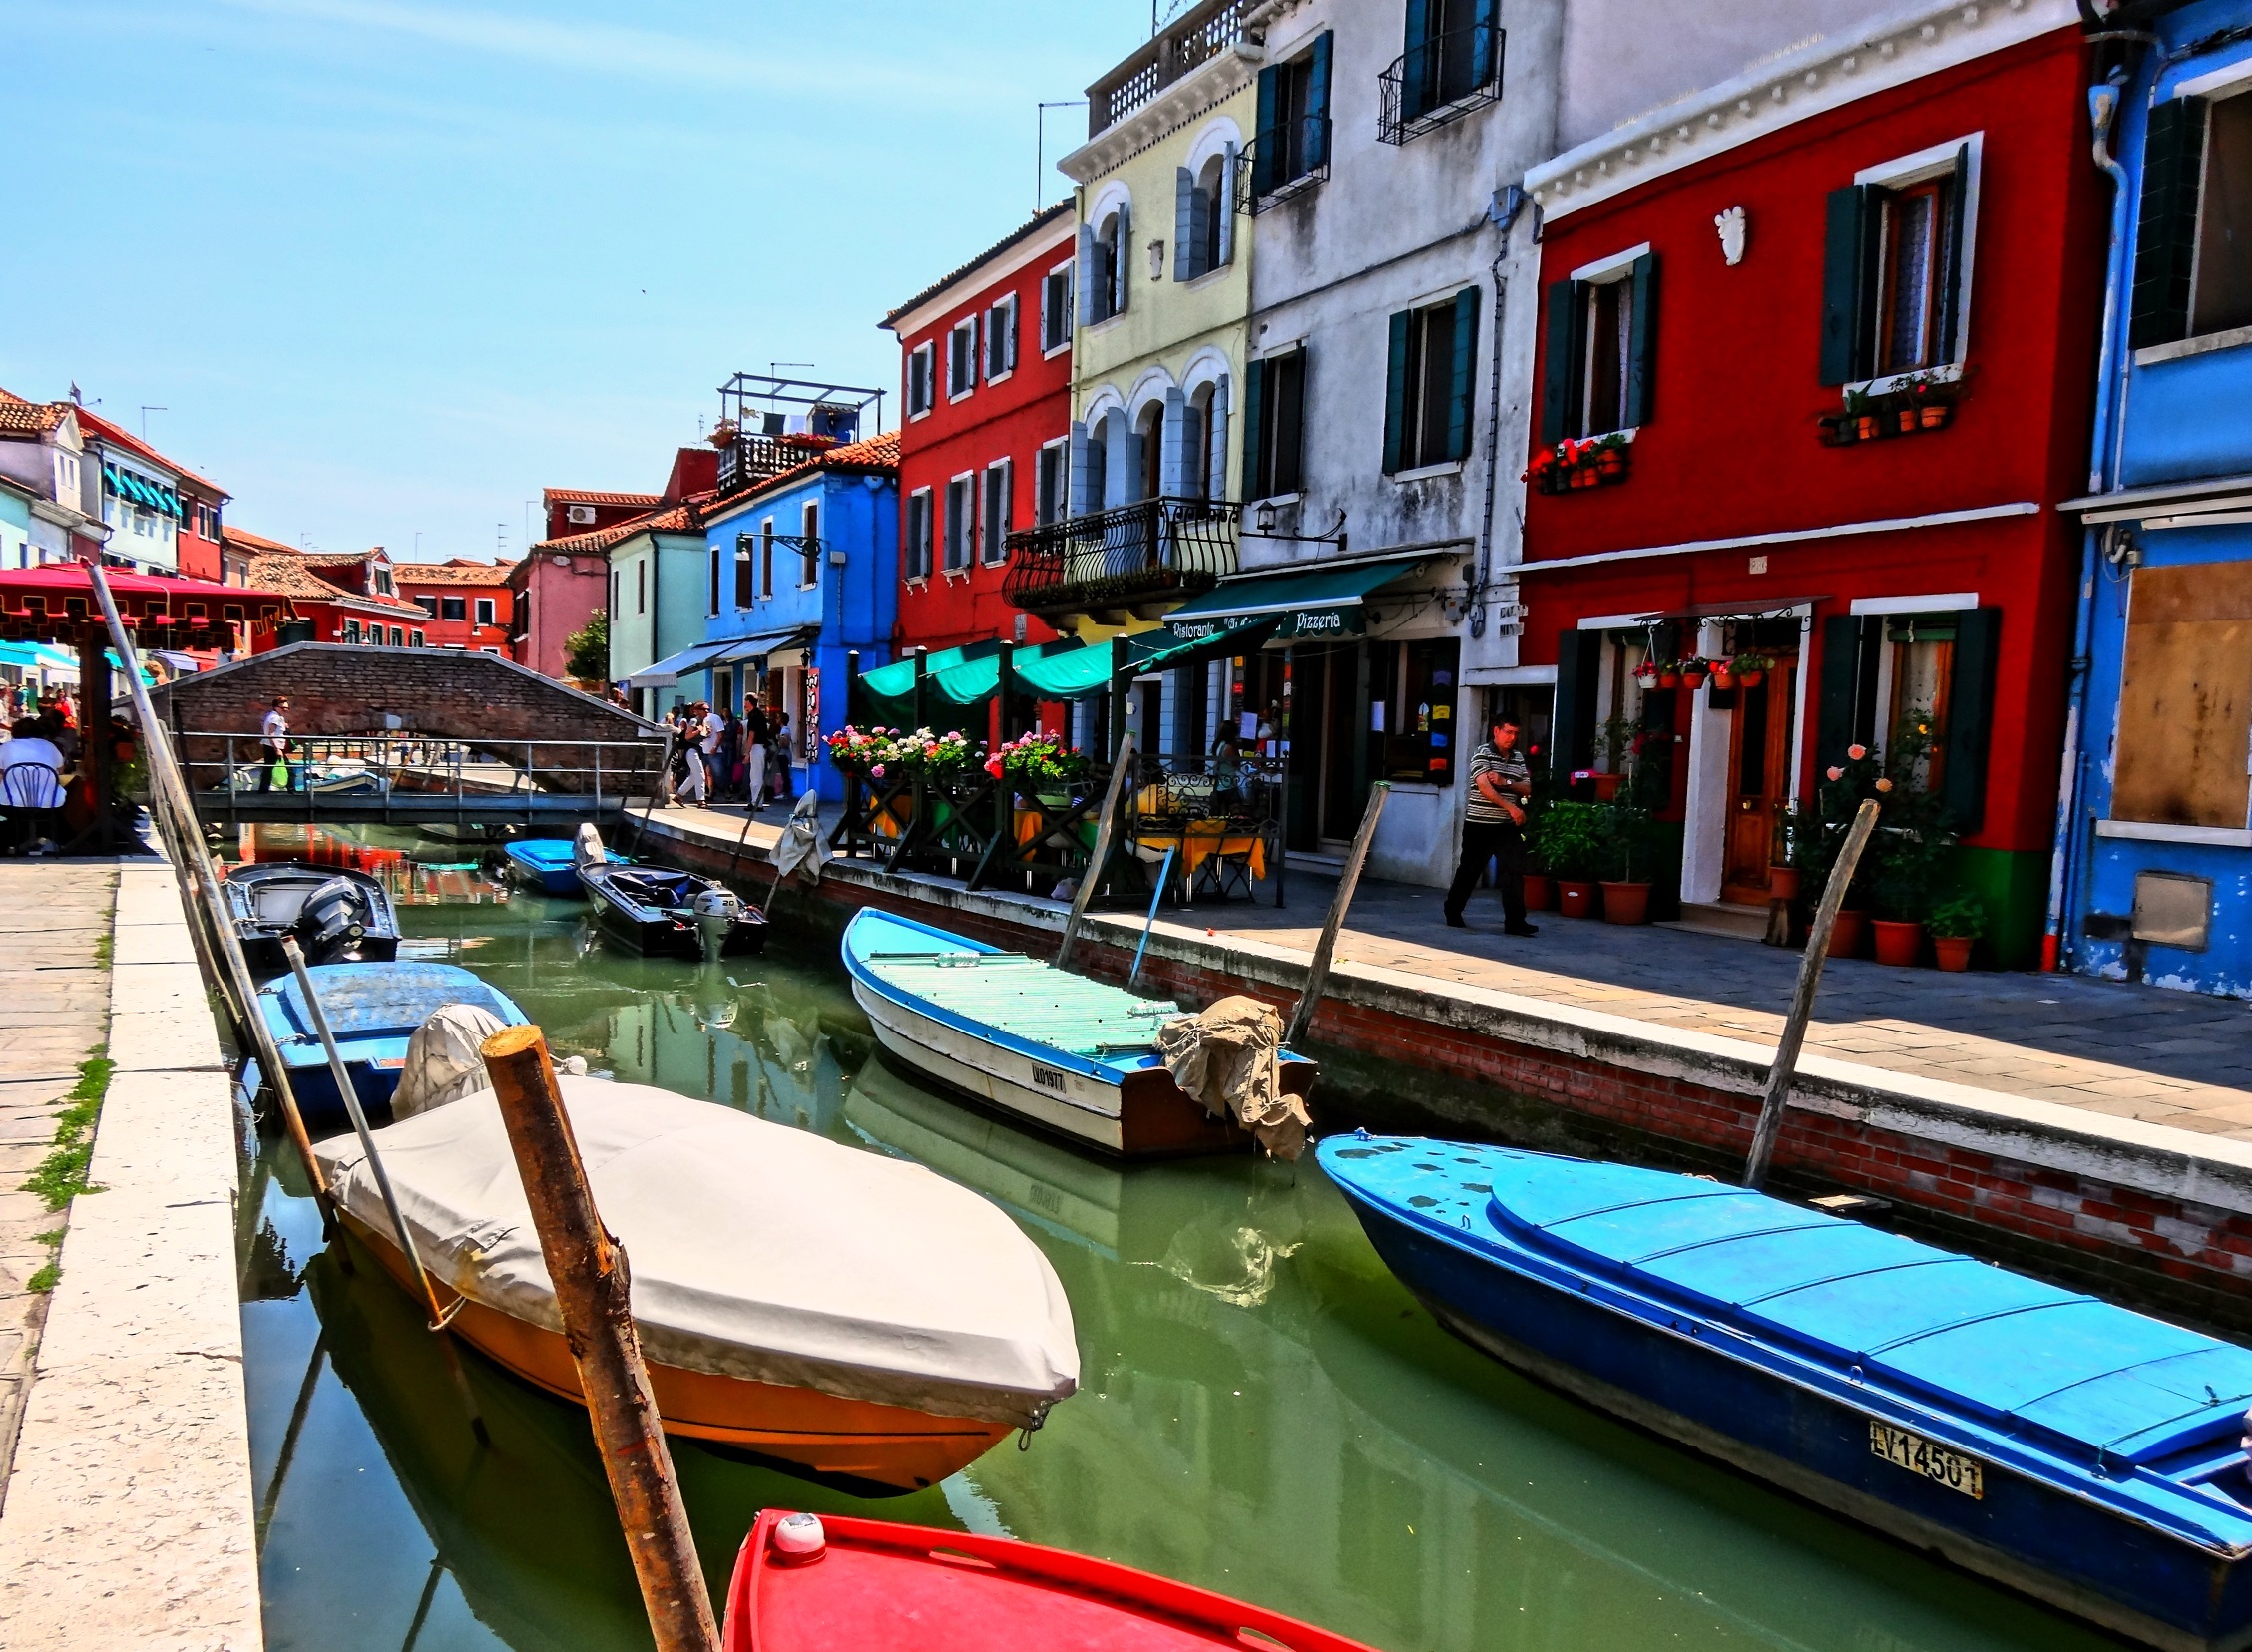 cricket hide Grudge 7 lucruri pe care trebuie sa le faci in Venetia